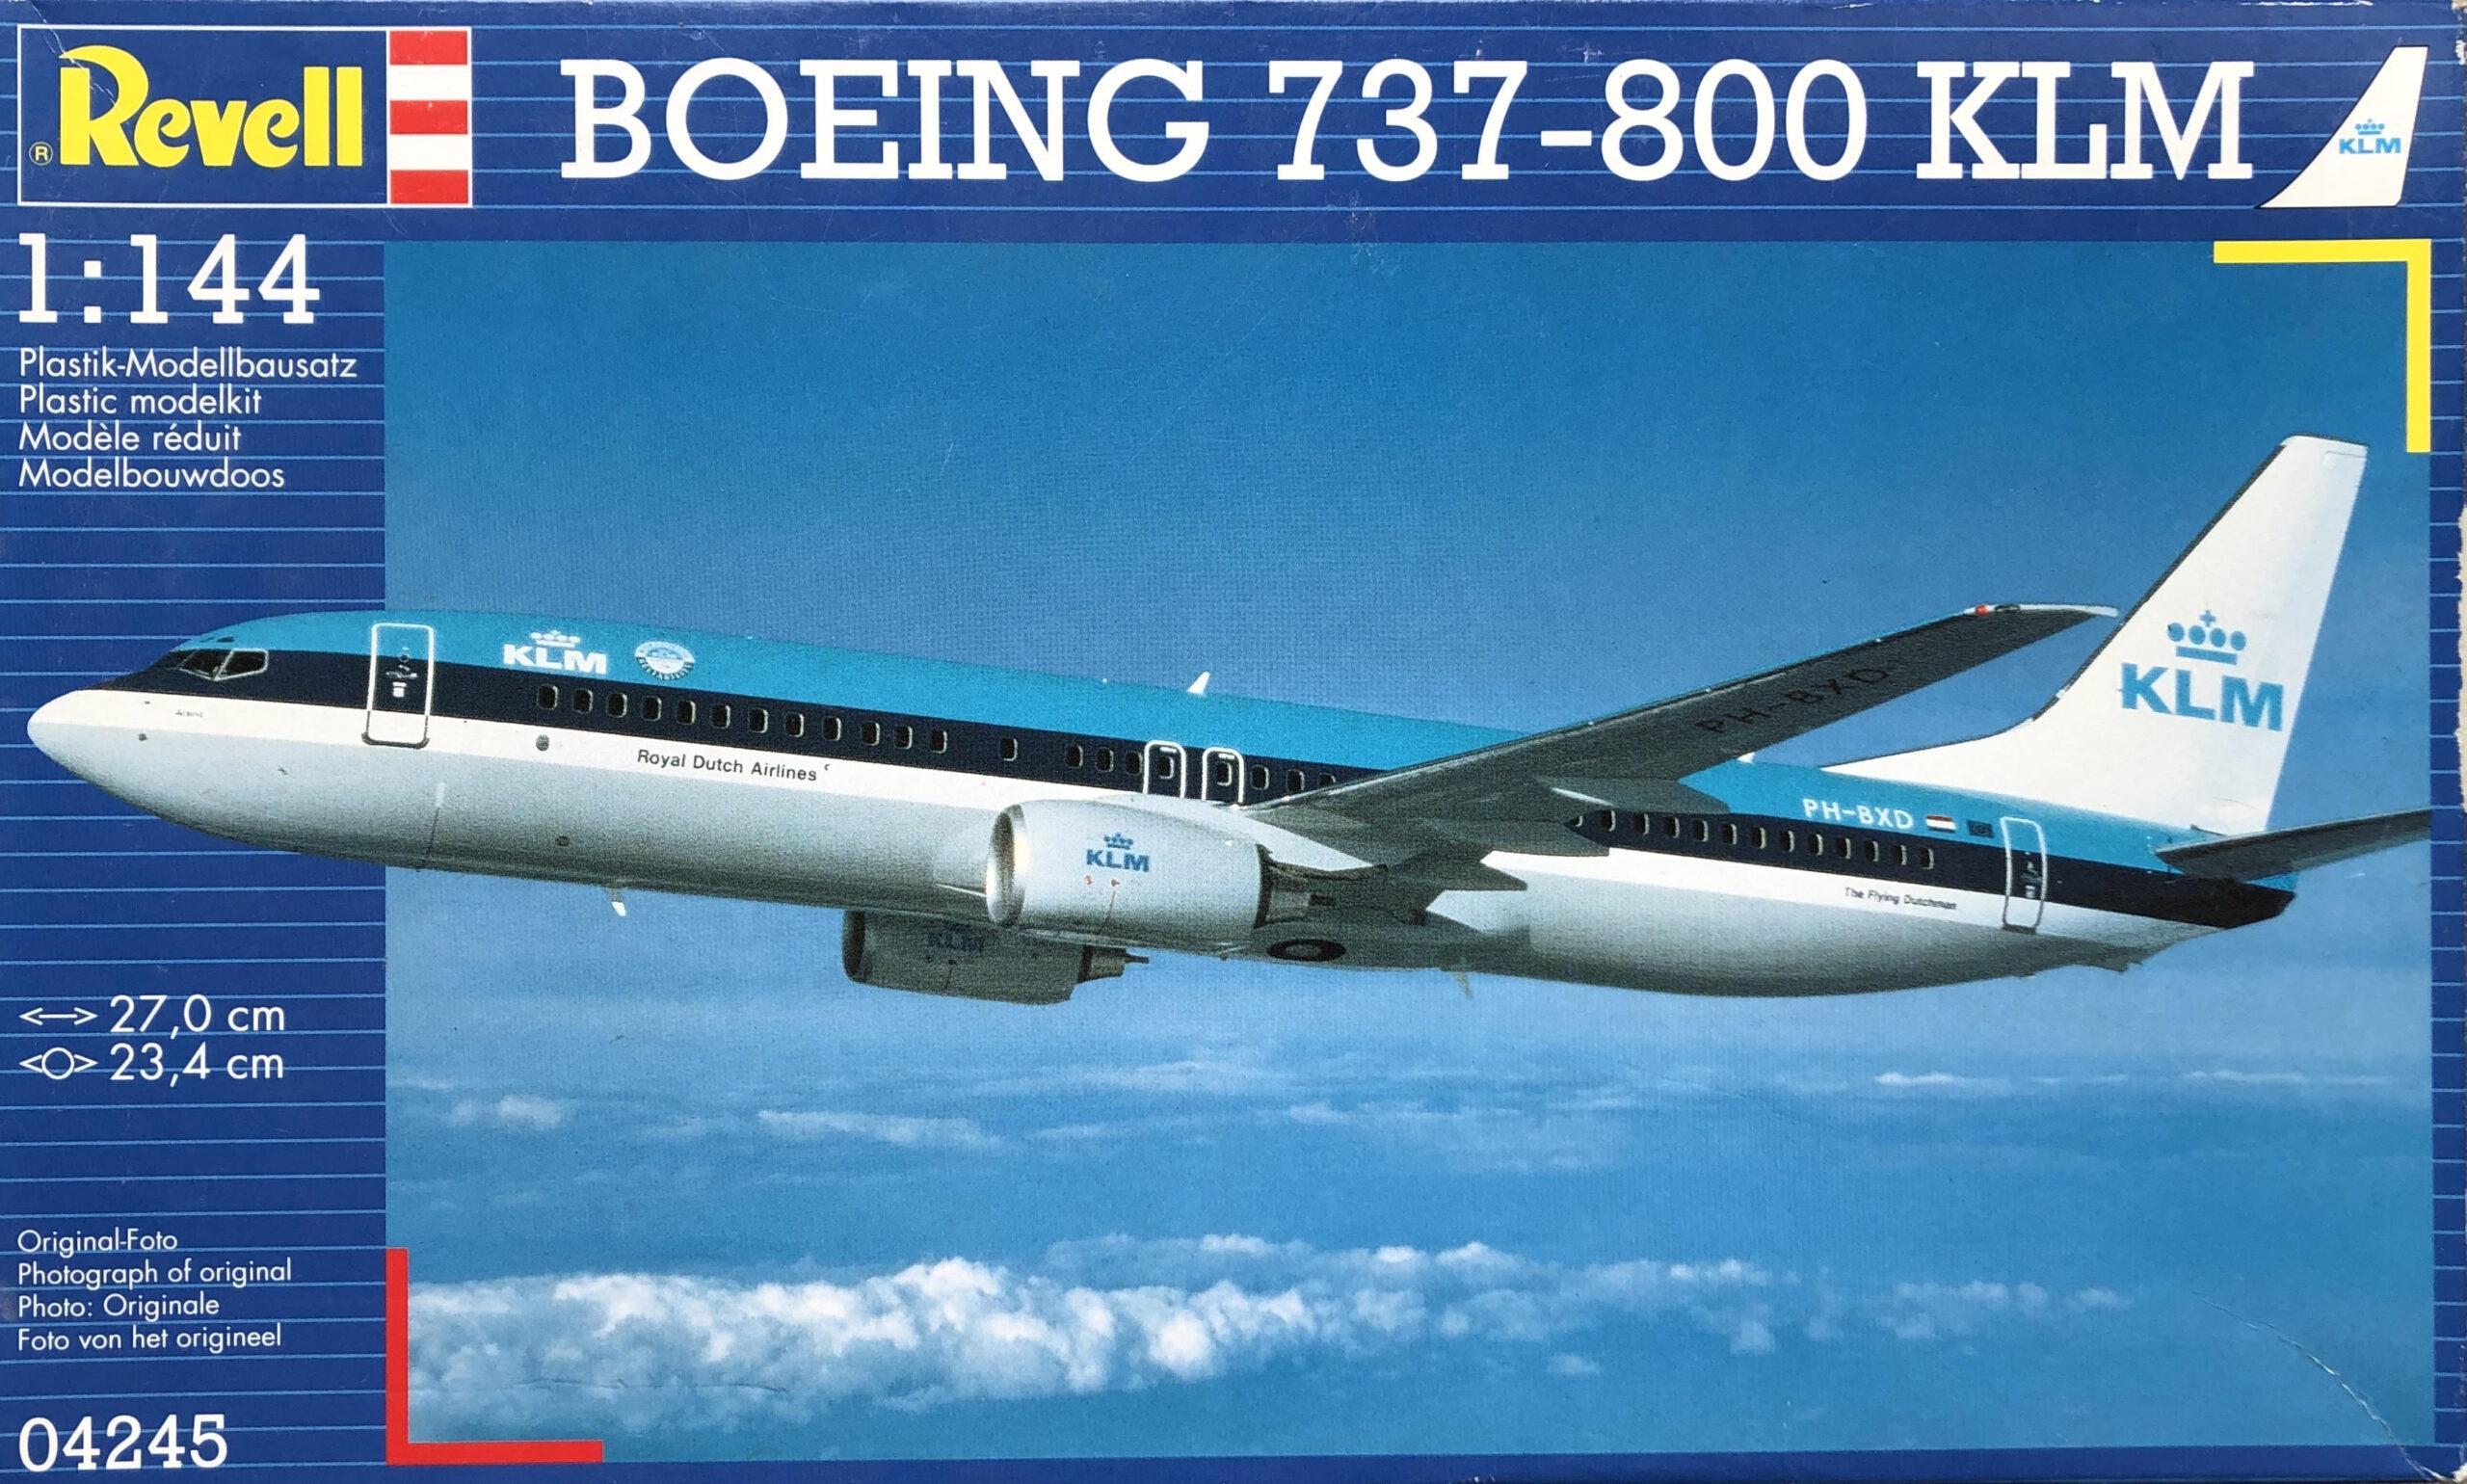 Pickering Revolutionair Ijdelheid Boeing 737-800 KLM - Naval Models